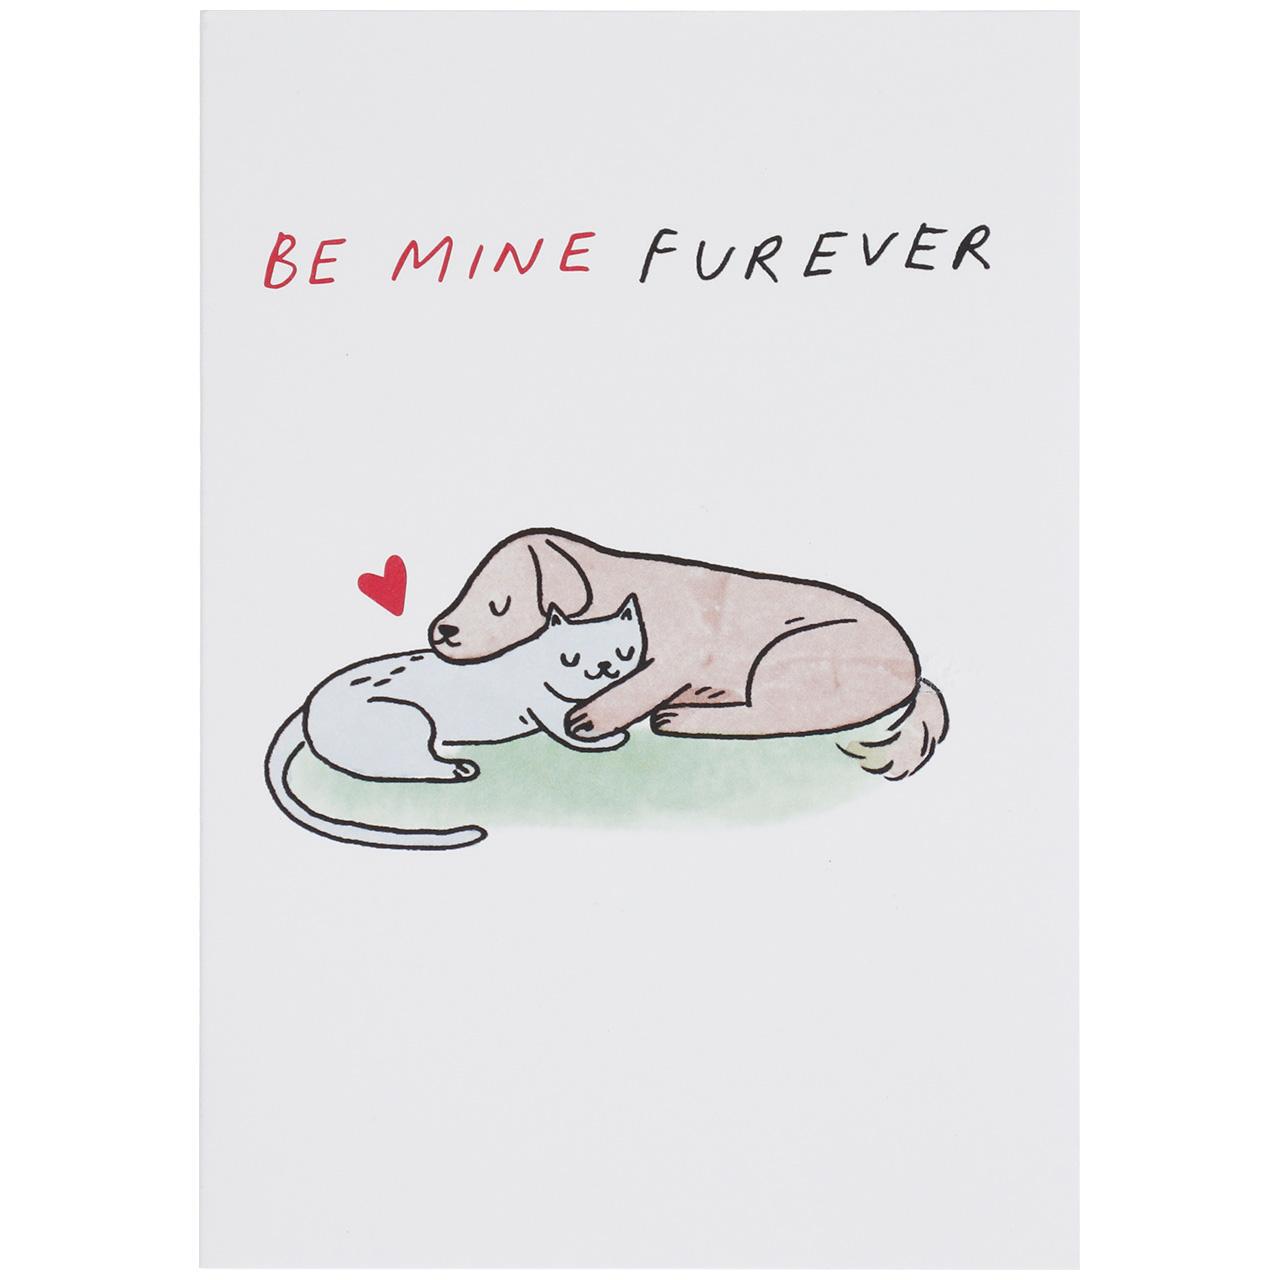 M&S Be Mine Furever Valentine's Day Card